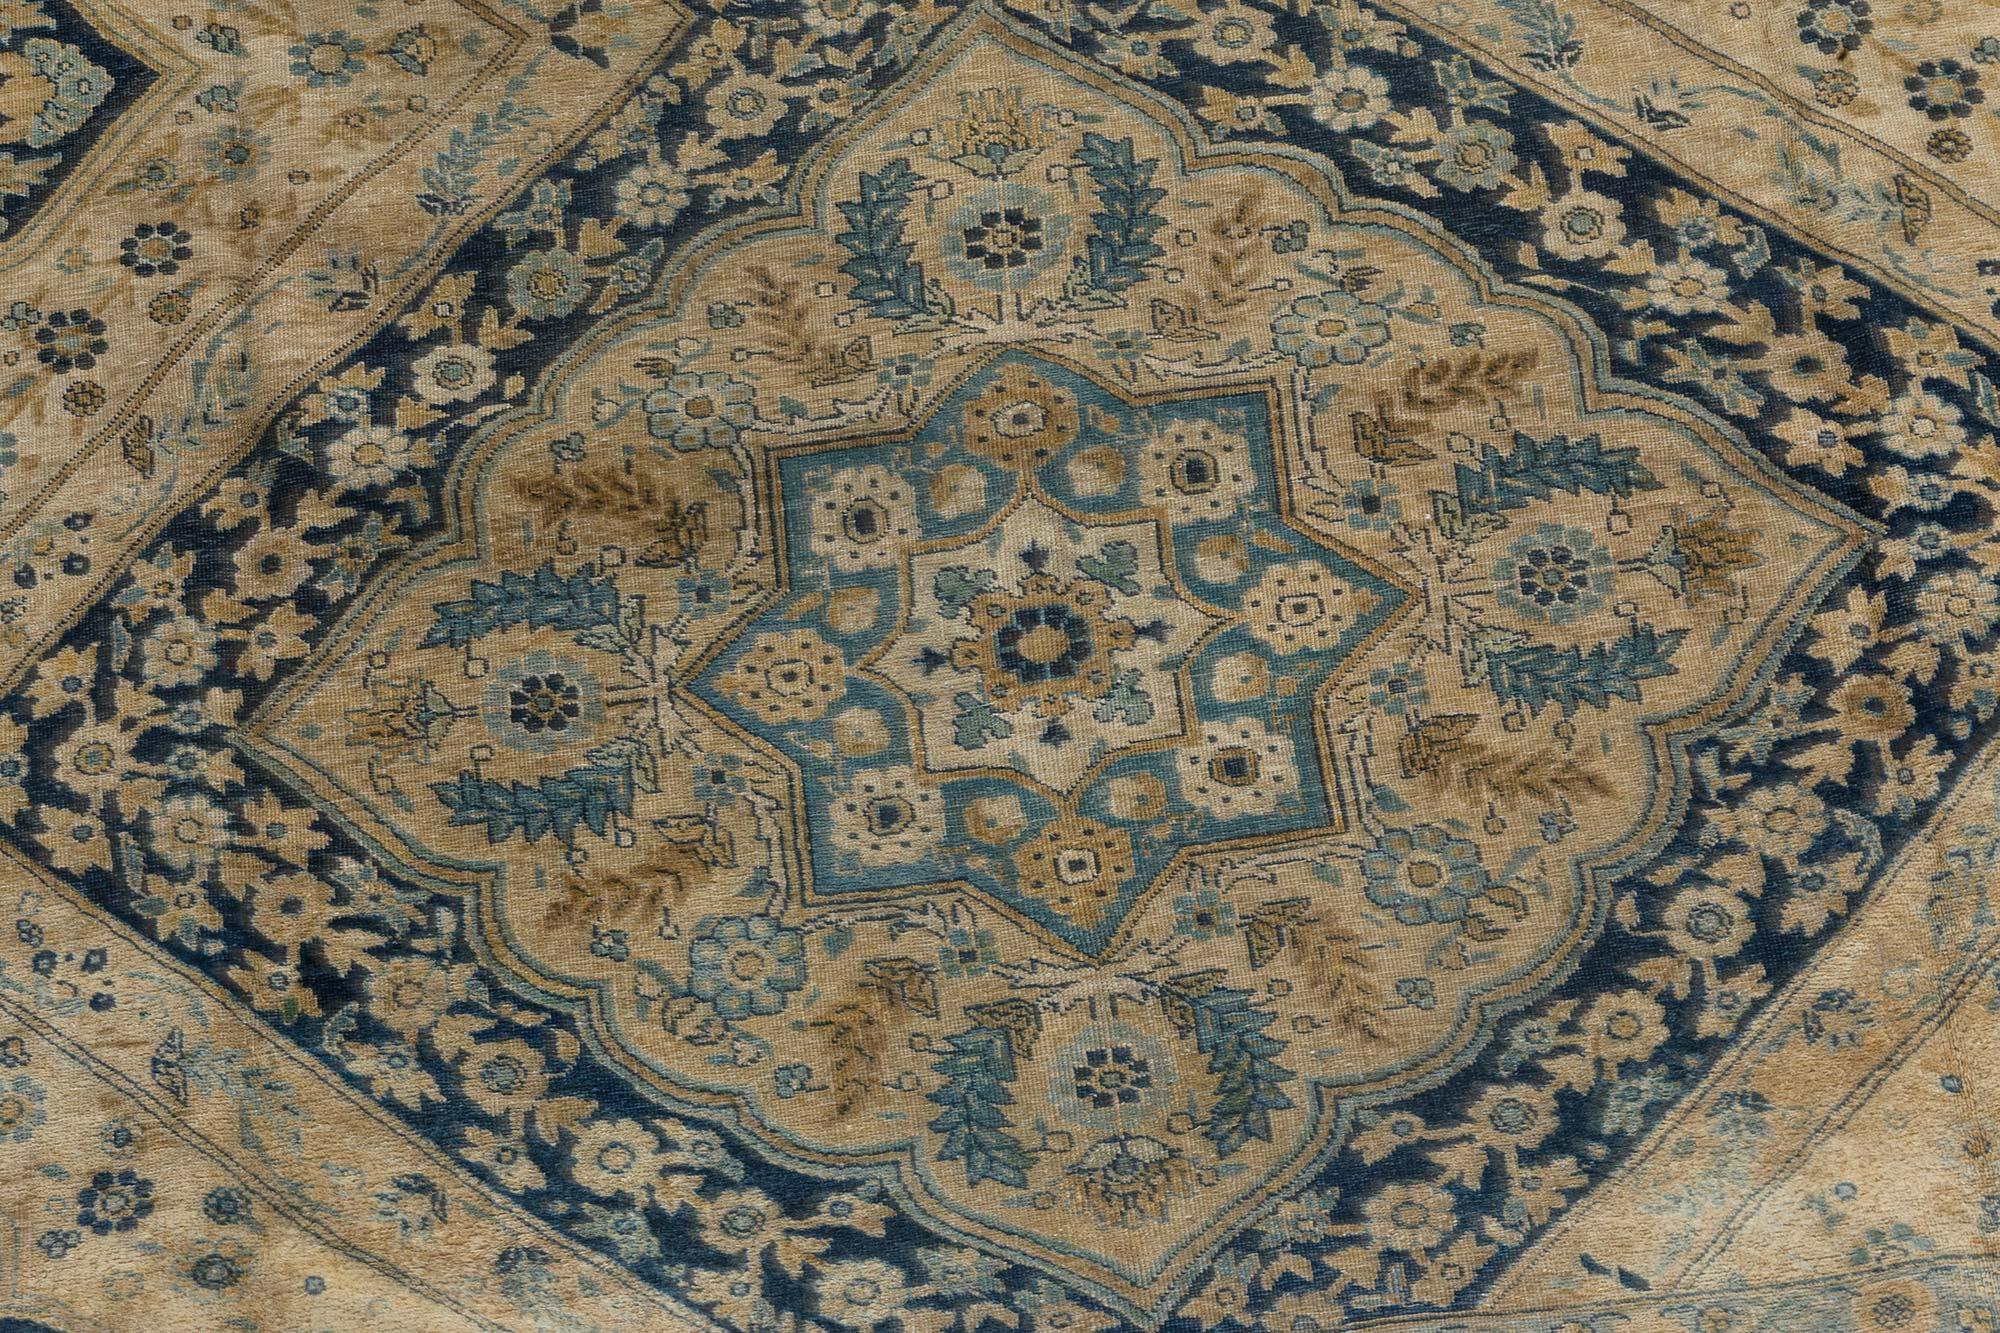 Authentic Early 20th century Persian Tabriz handmade carpet
Size: 9'9